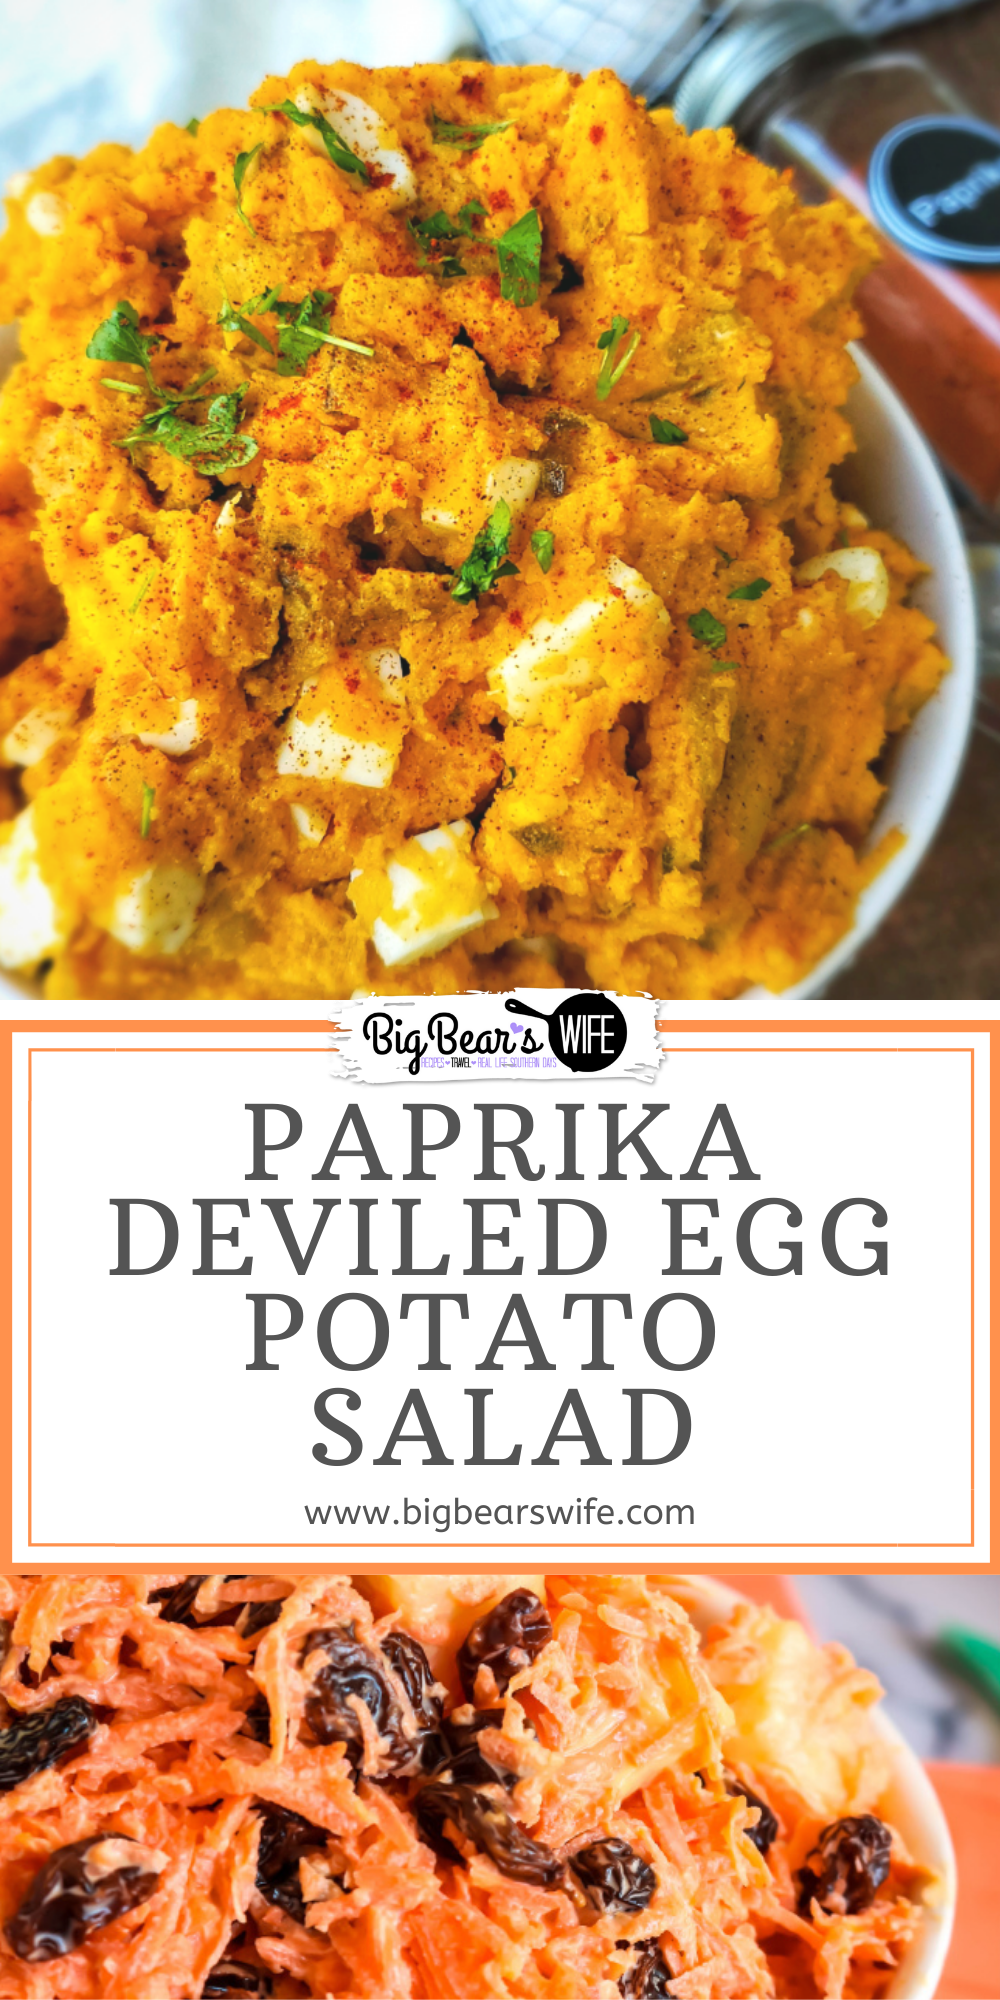 Paprika Deviled Egg Potato Salad - This southern Paprika Deviled Egg Potato Salad combines Paprika Deviled Eggs and Southern Potato salad into one amazing side dish! via @bigbearswife